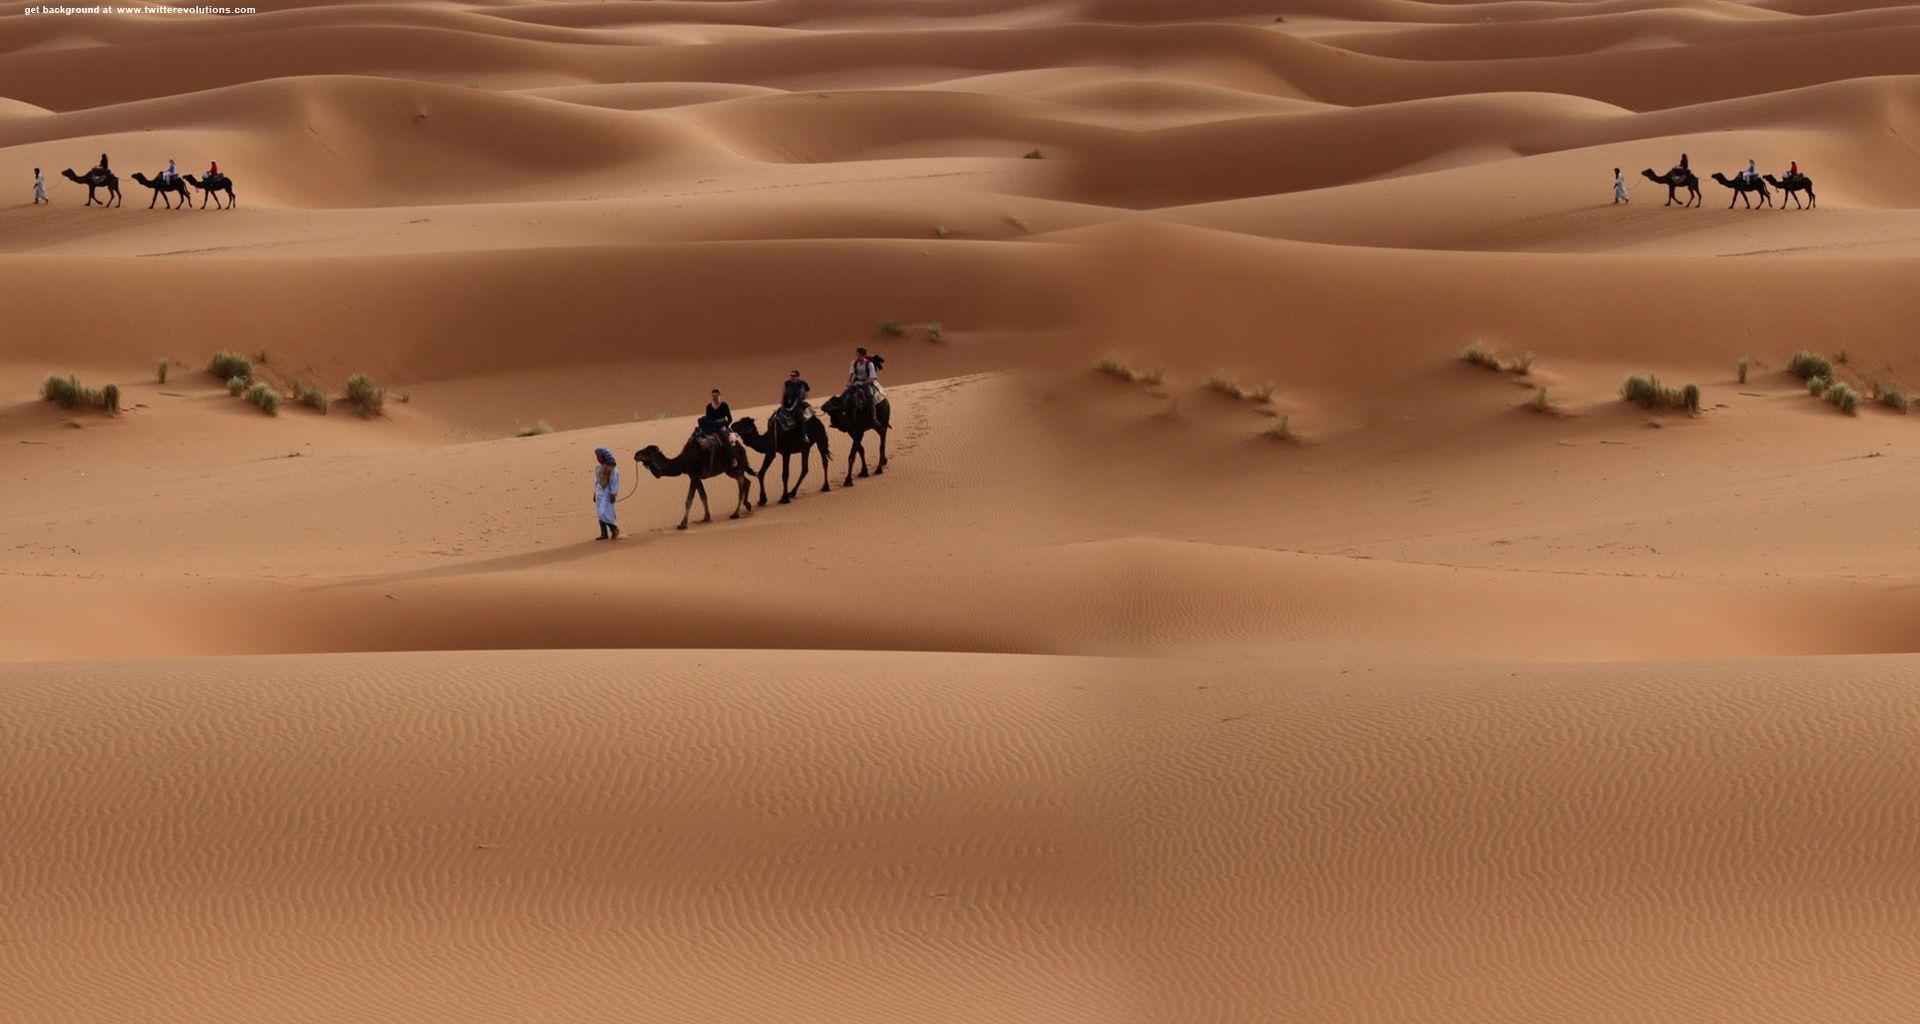 A walk in the desert Twitter background. Twitter background